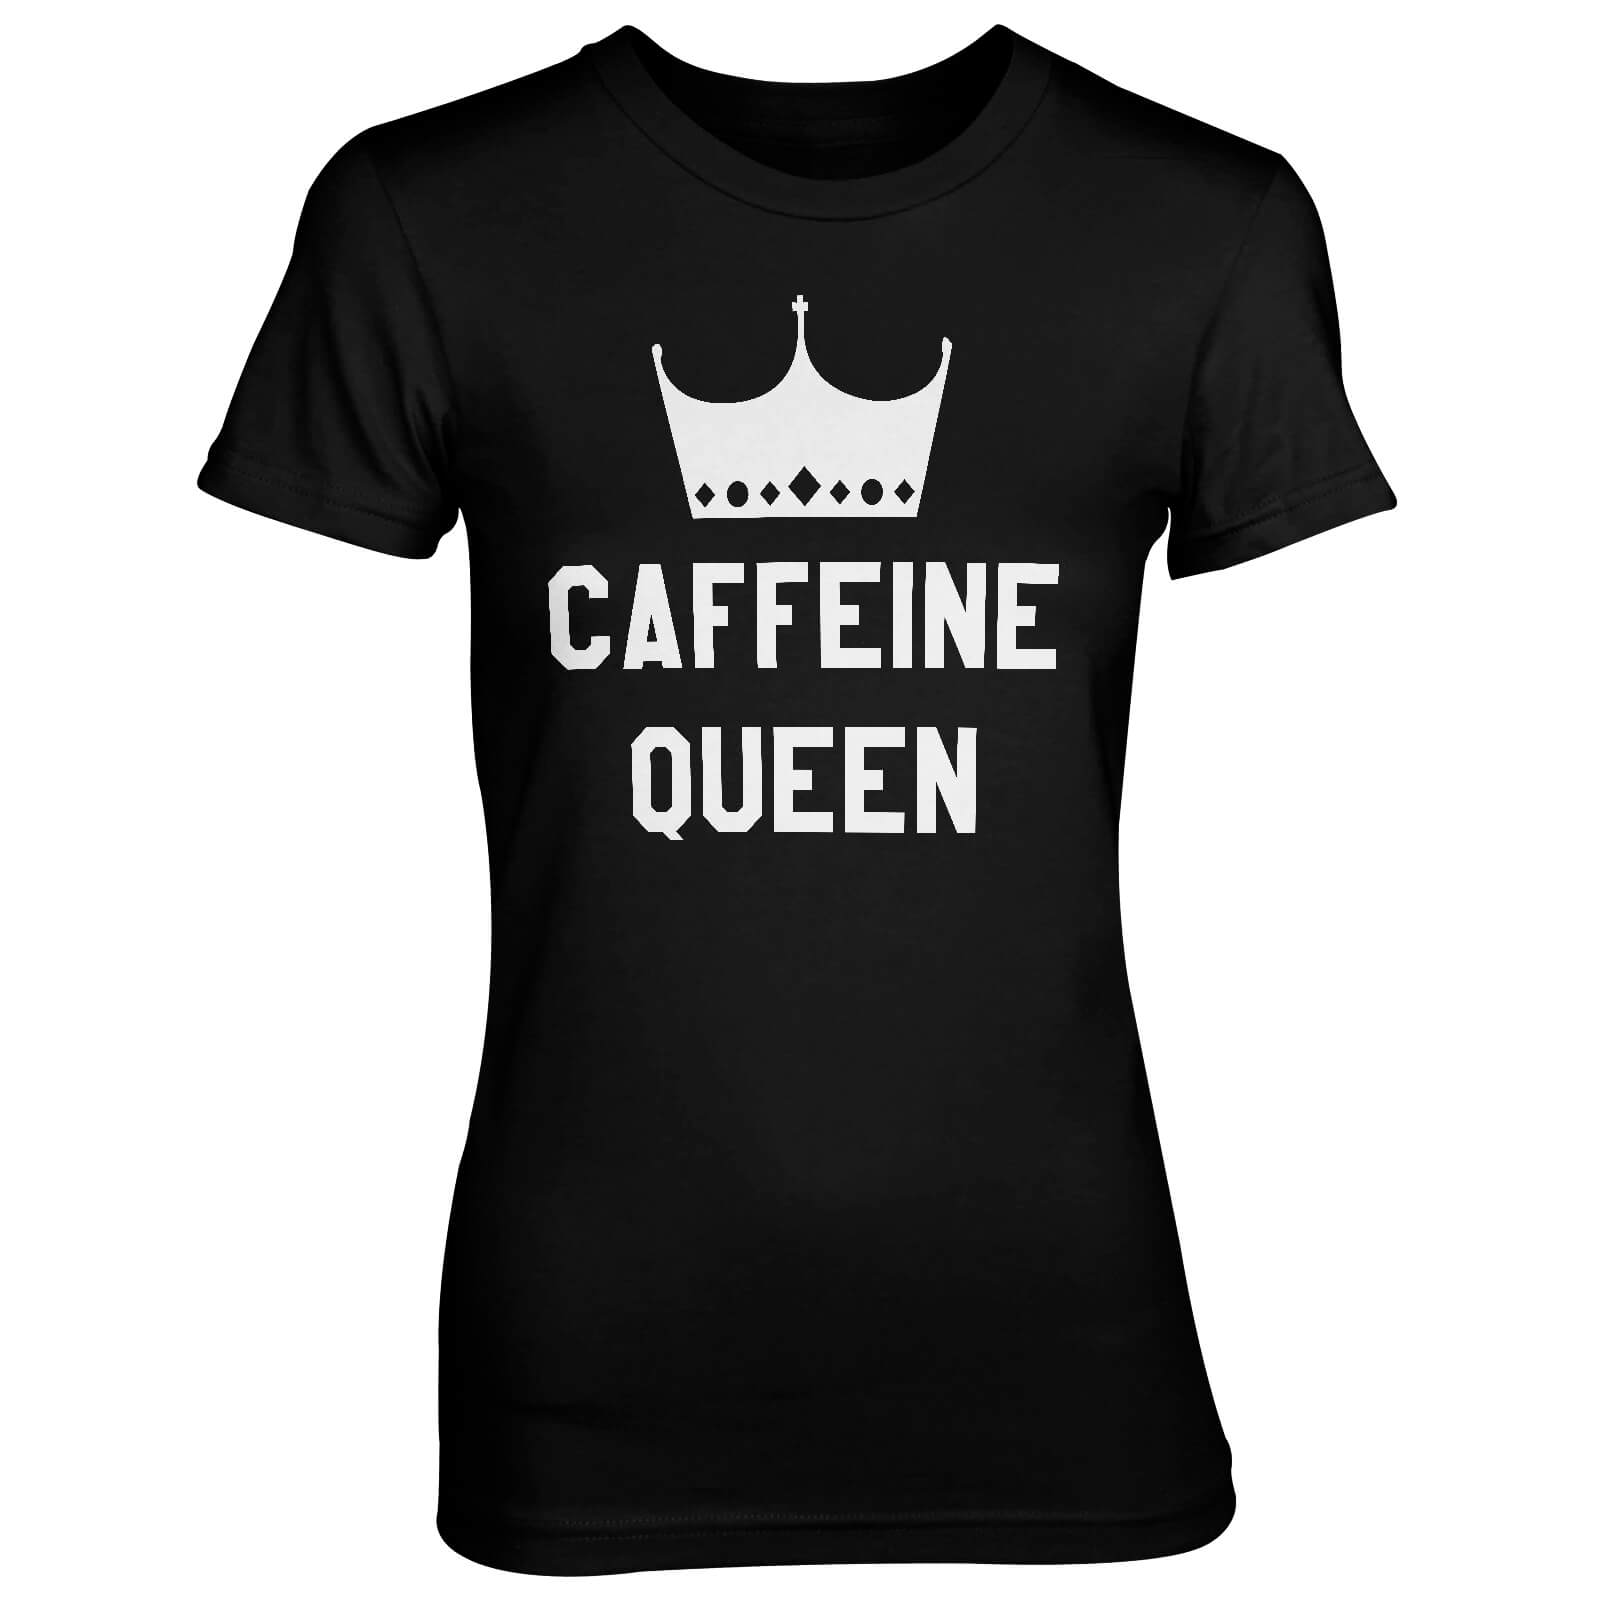 Caffeine Queen Women's Black T-Shirt - S - Black